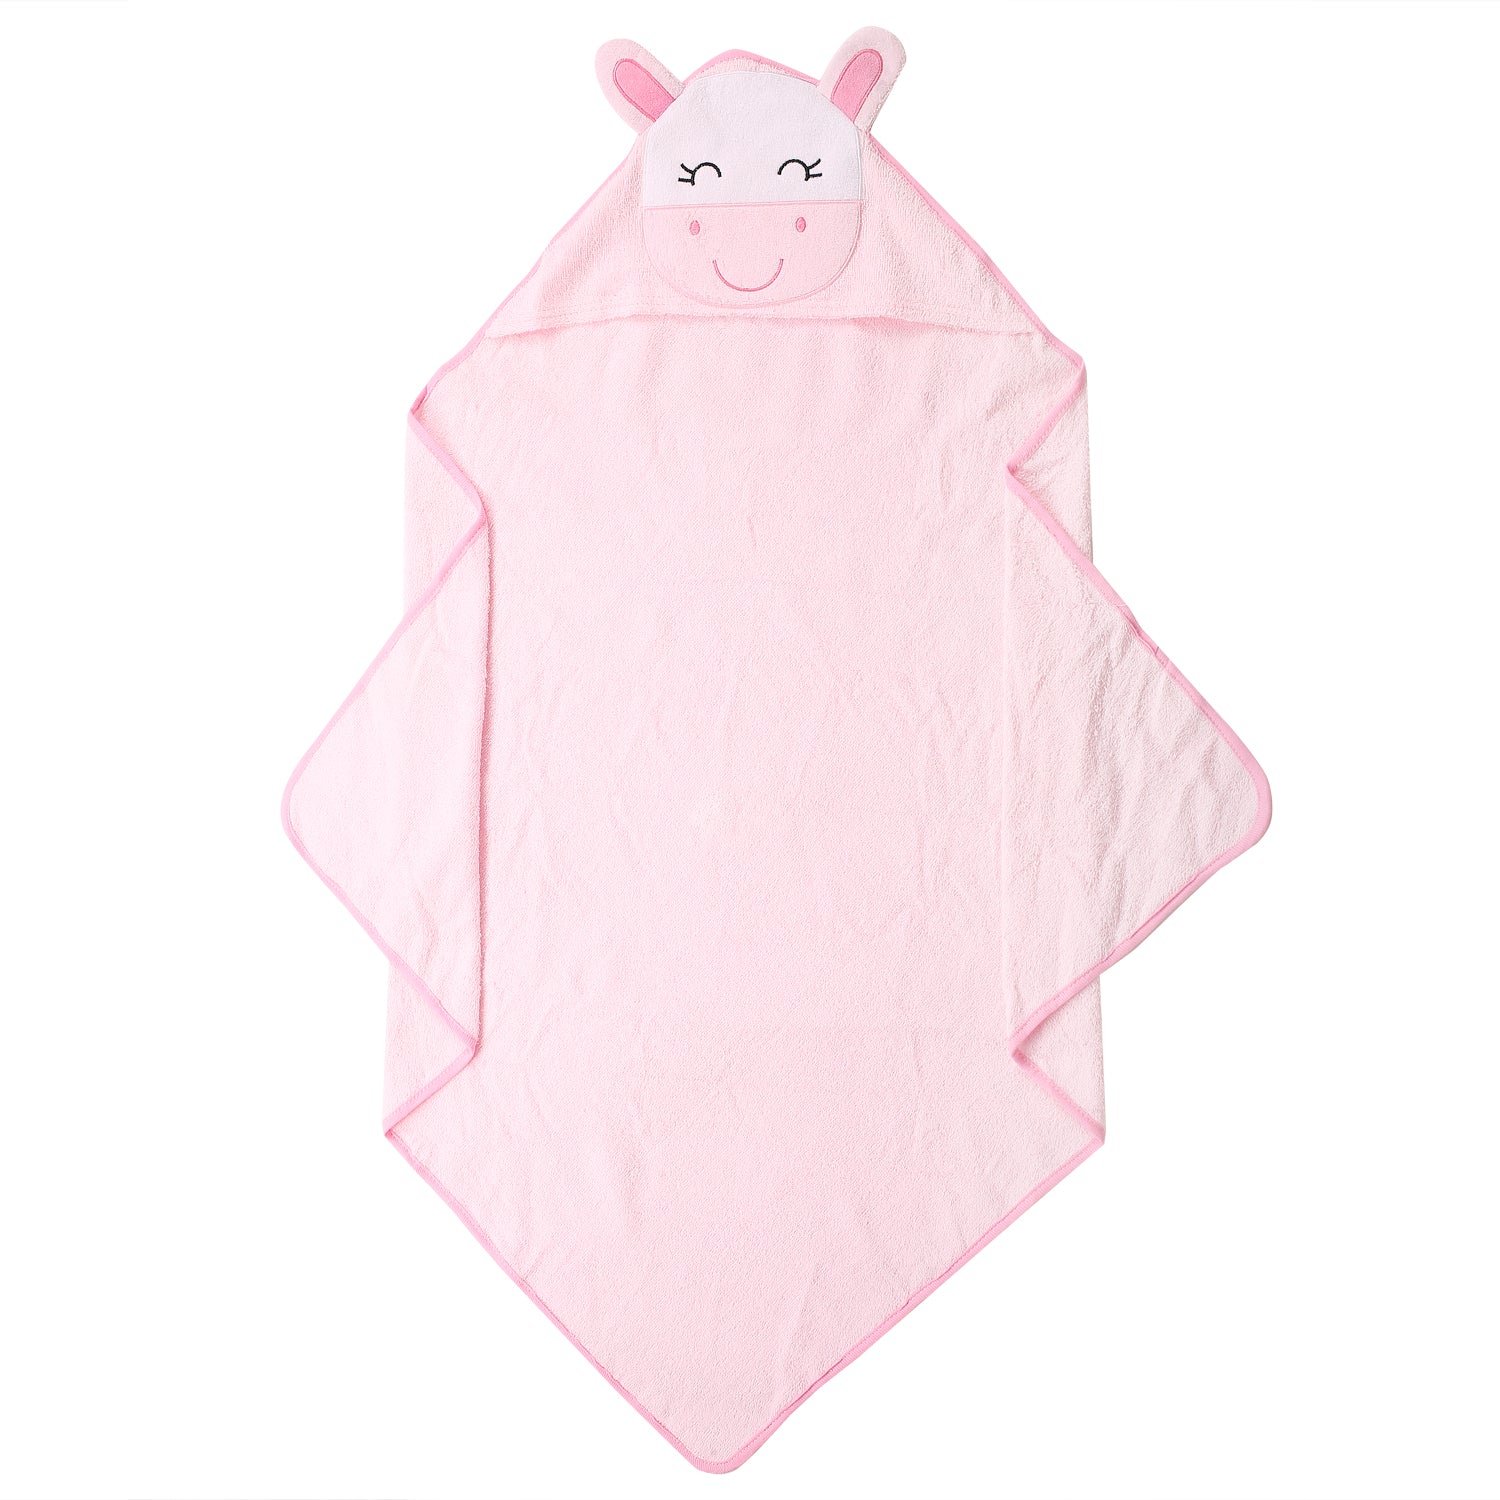 Sleepy Bunny Pink Hooded Towel - Baby Moo